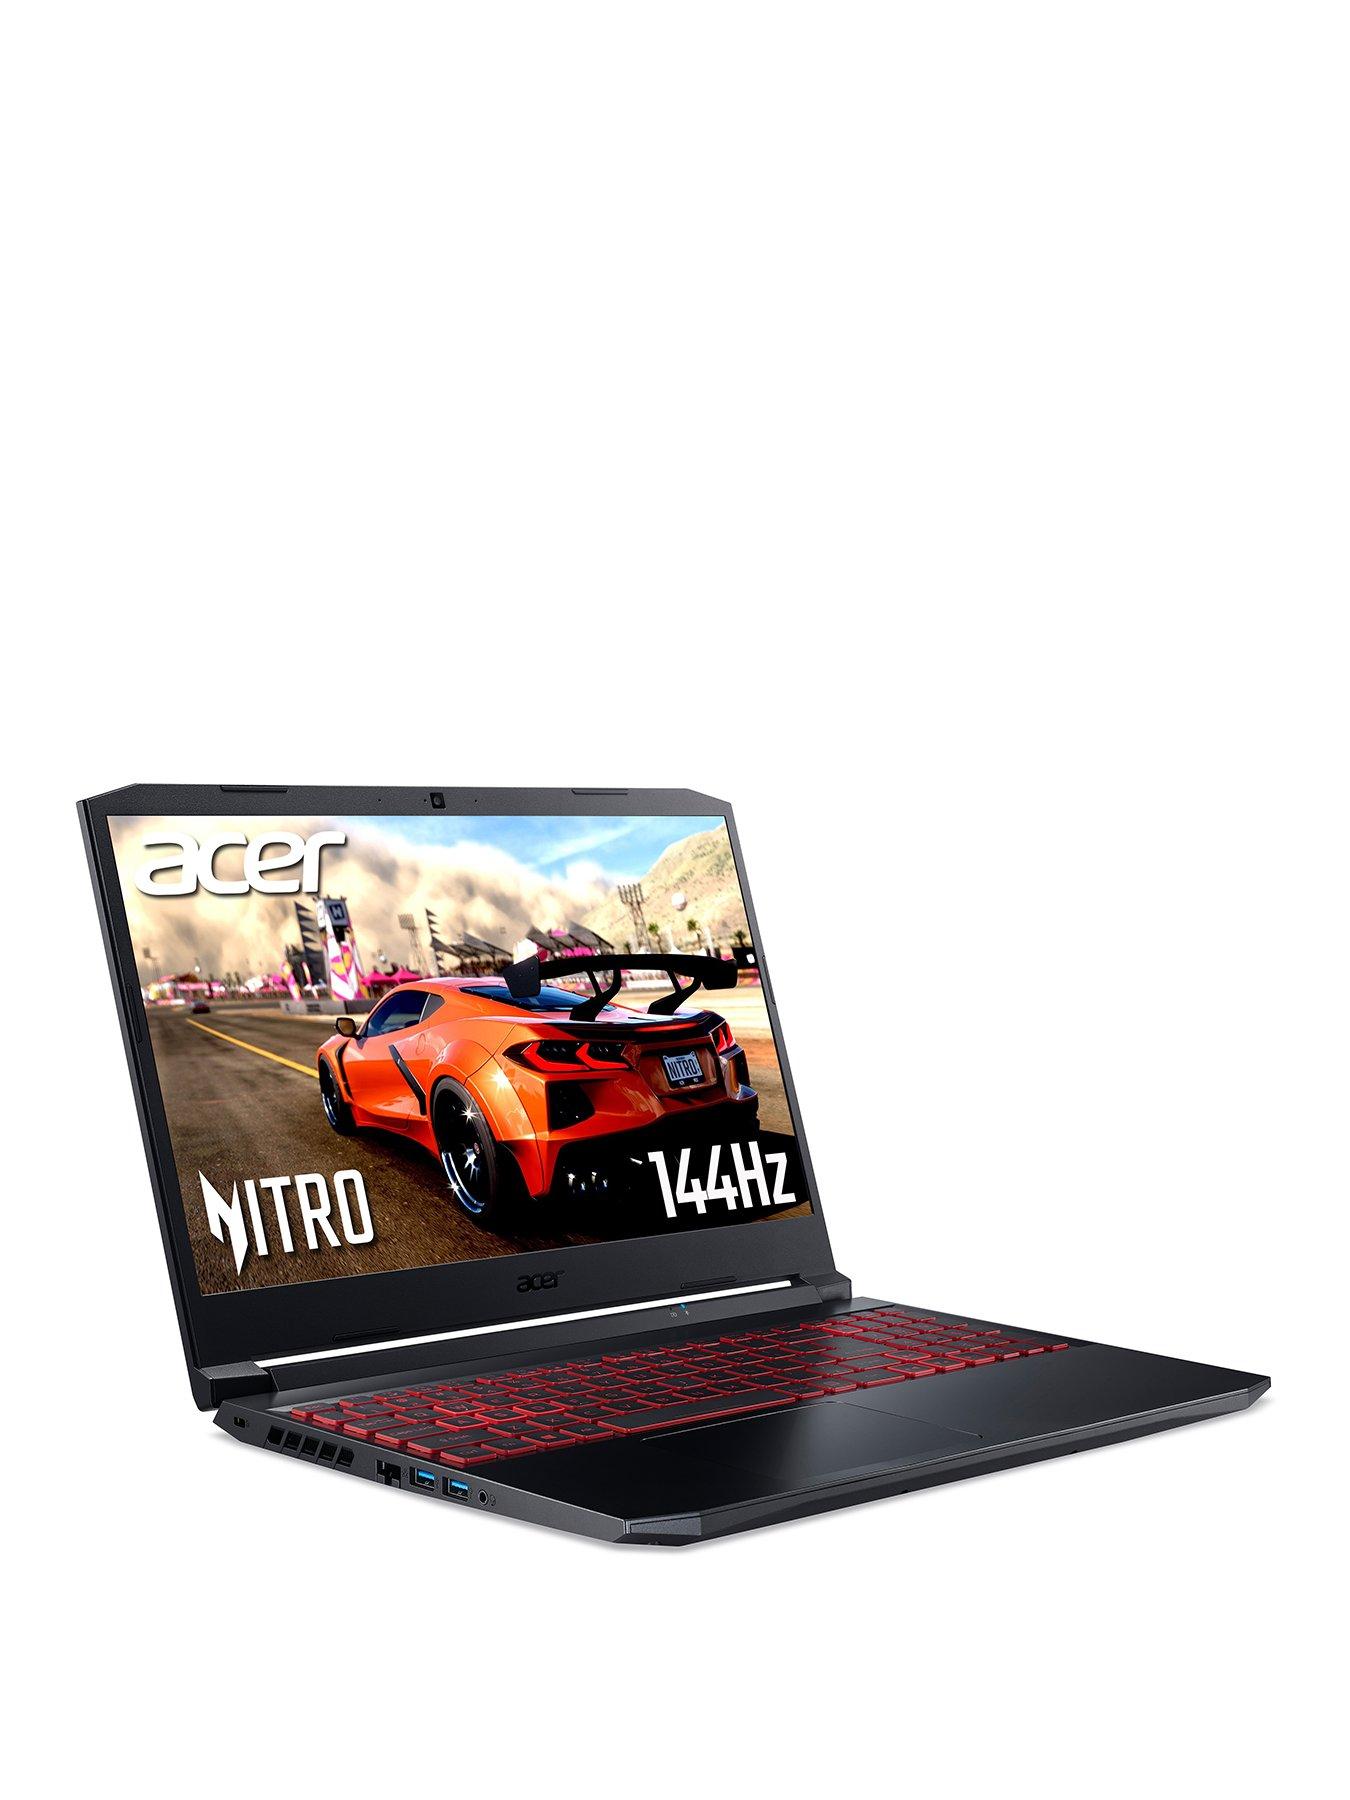 HP Envy x360 15T FHD IPS 15.6 Touchscreen 2-in-1 Laptop (Intel i5